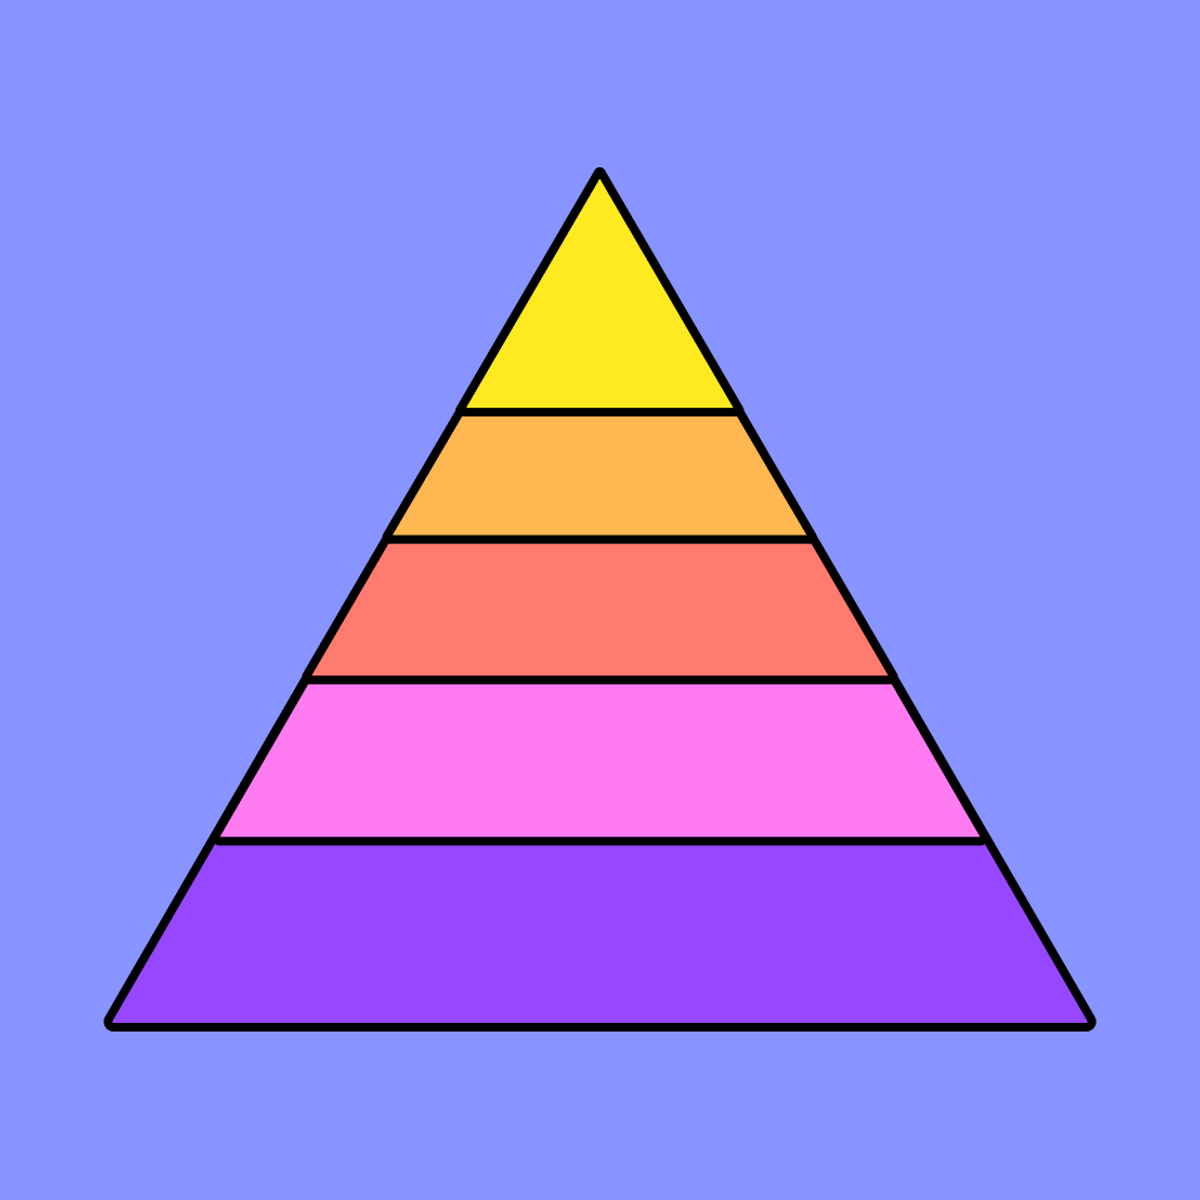 pyramid watch brand hierarchy